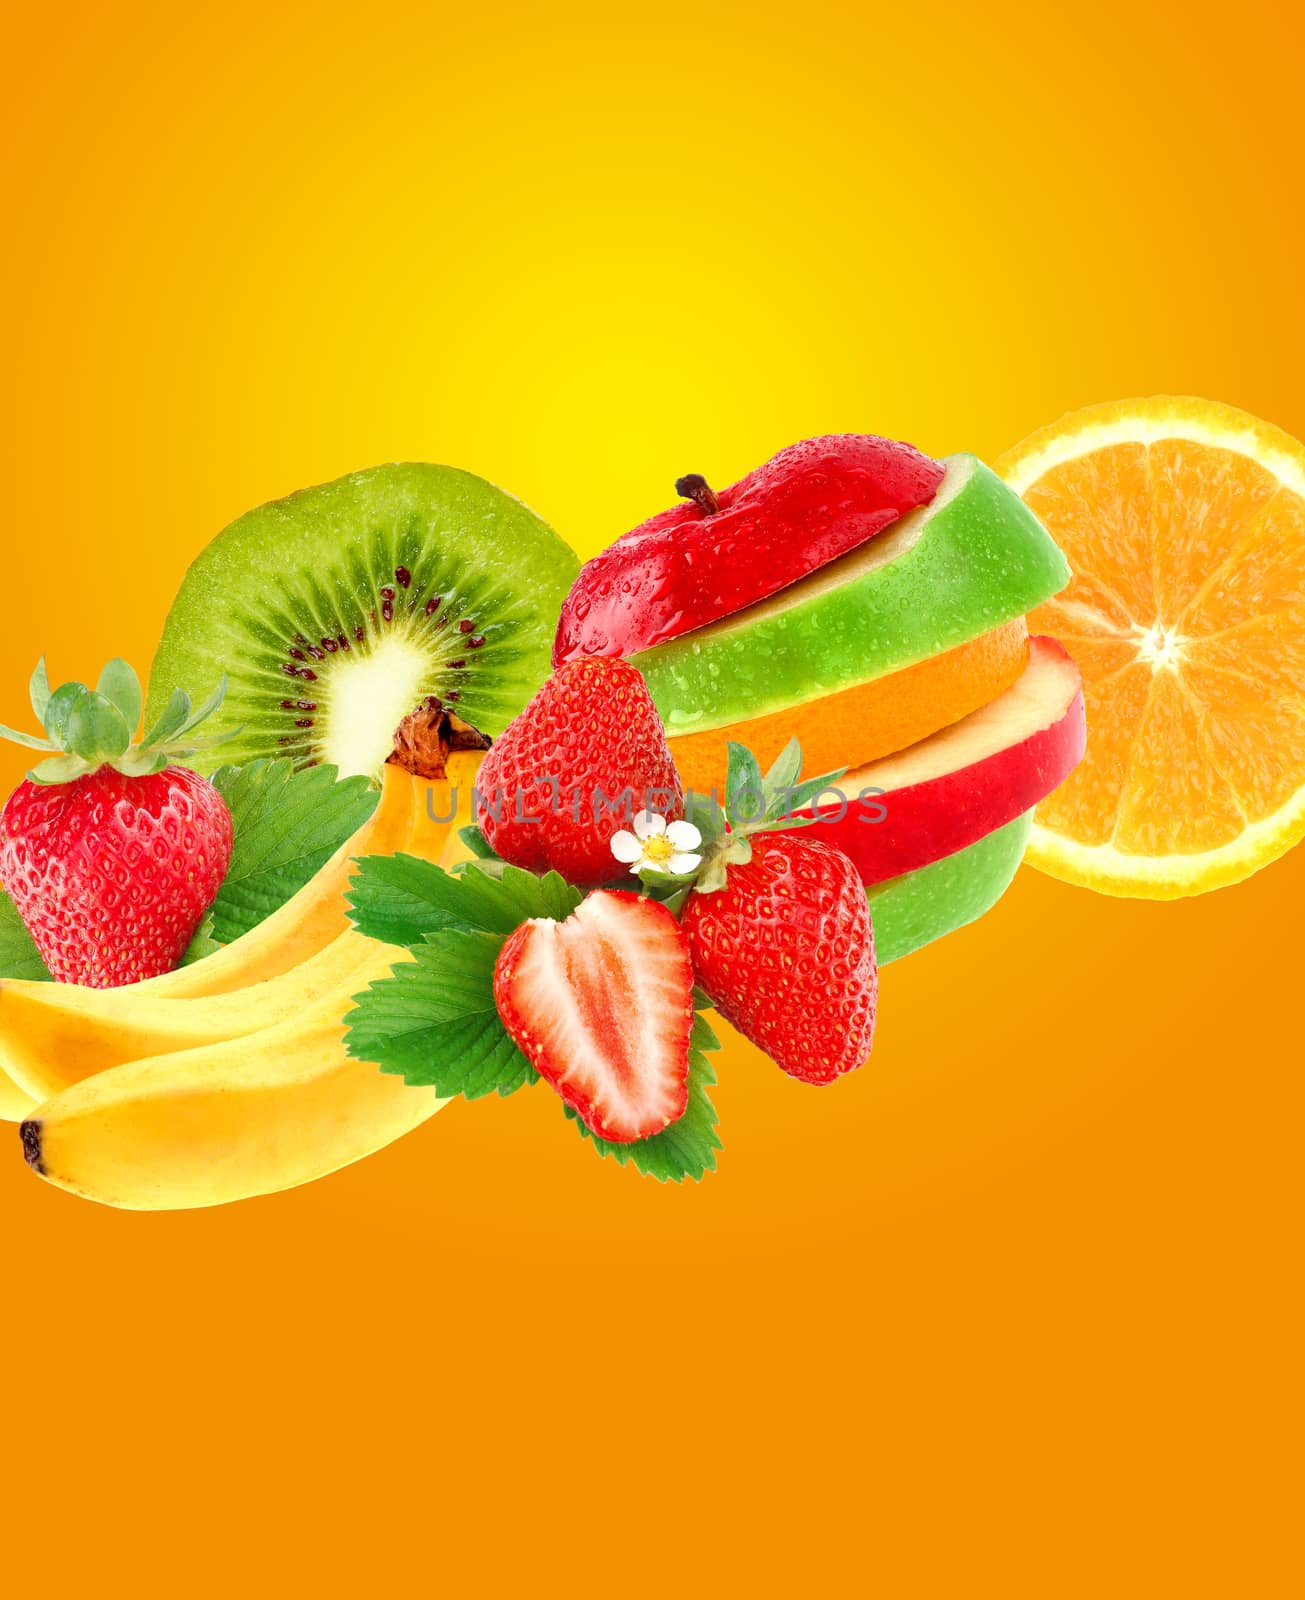 Many fruits on yellow background